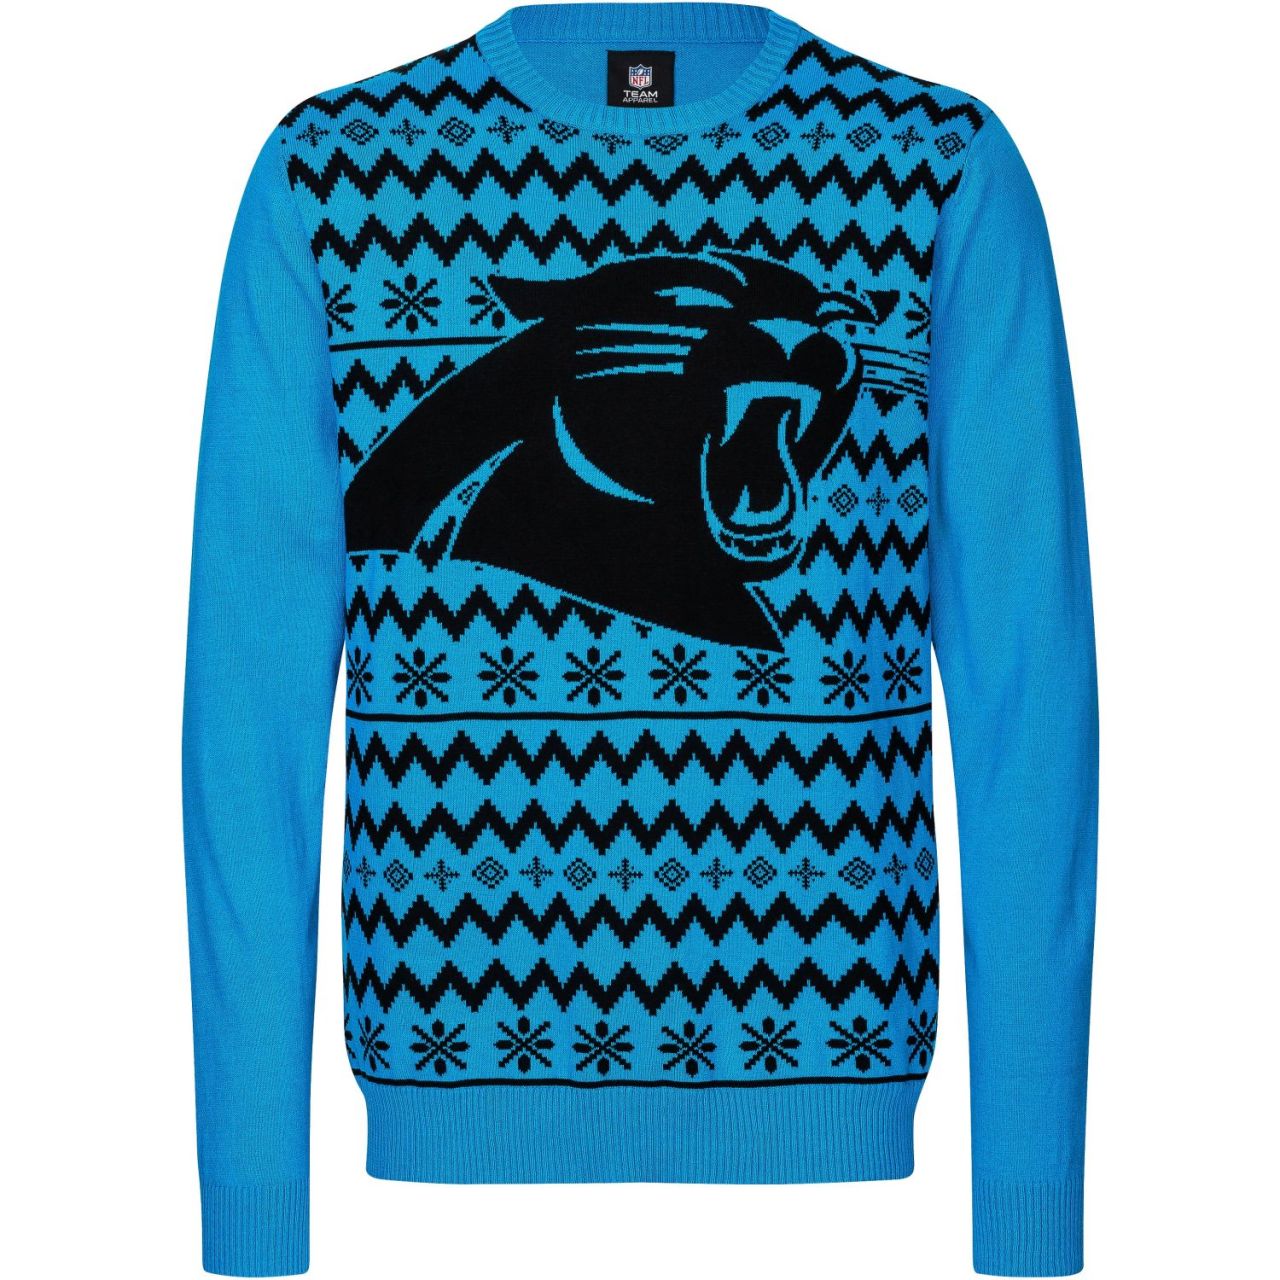 NFL Winter Sweater XMAS Strick Pullover Carolina Panthers von FOCO